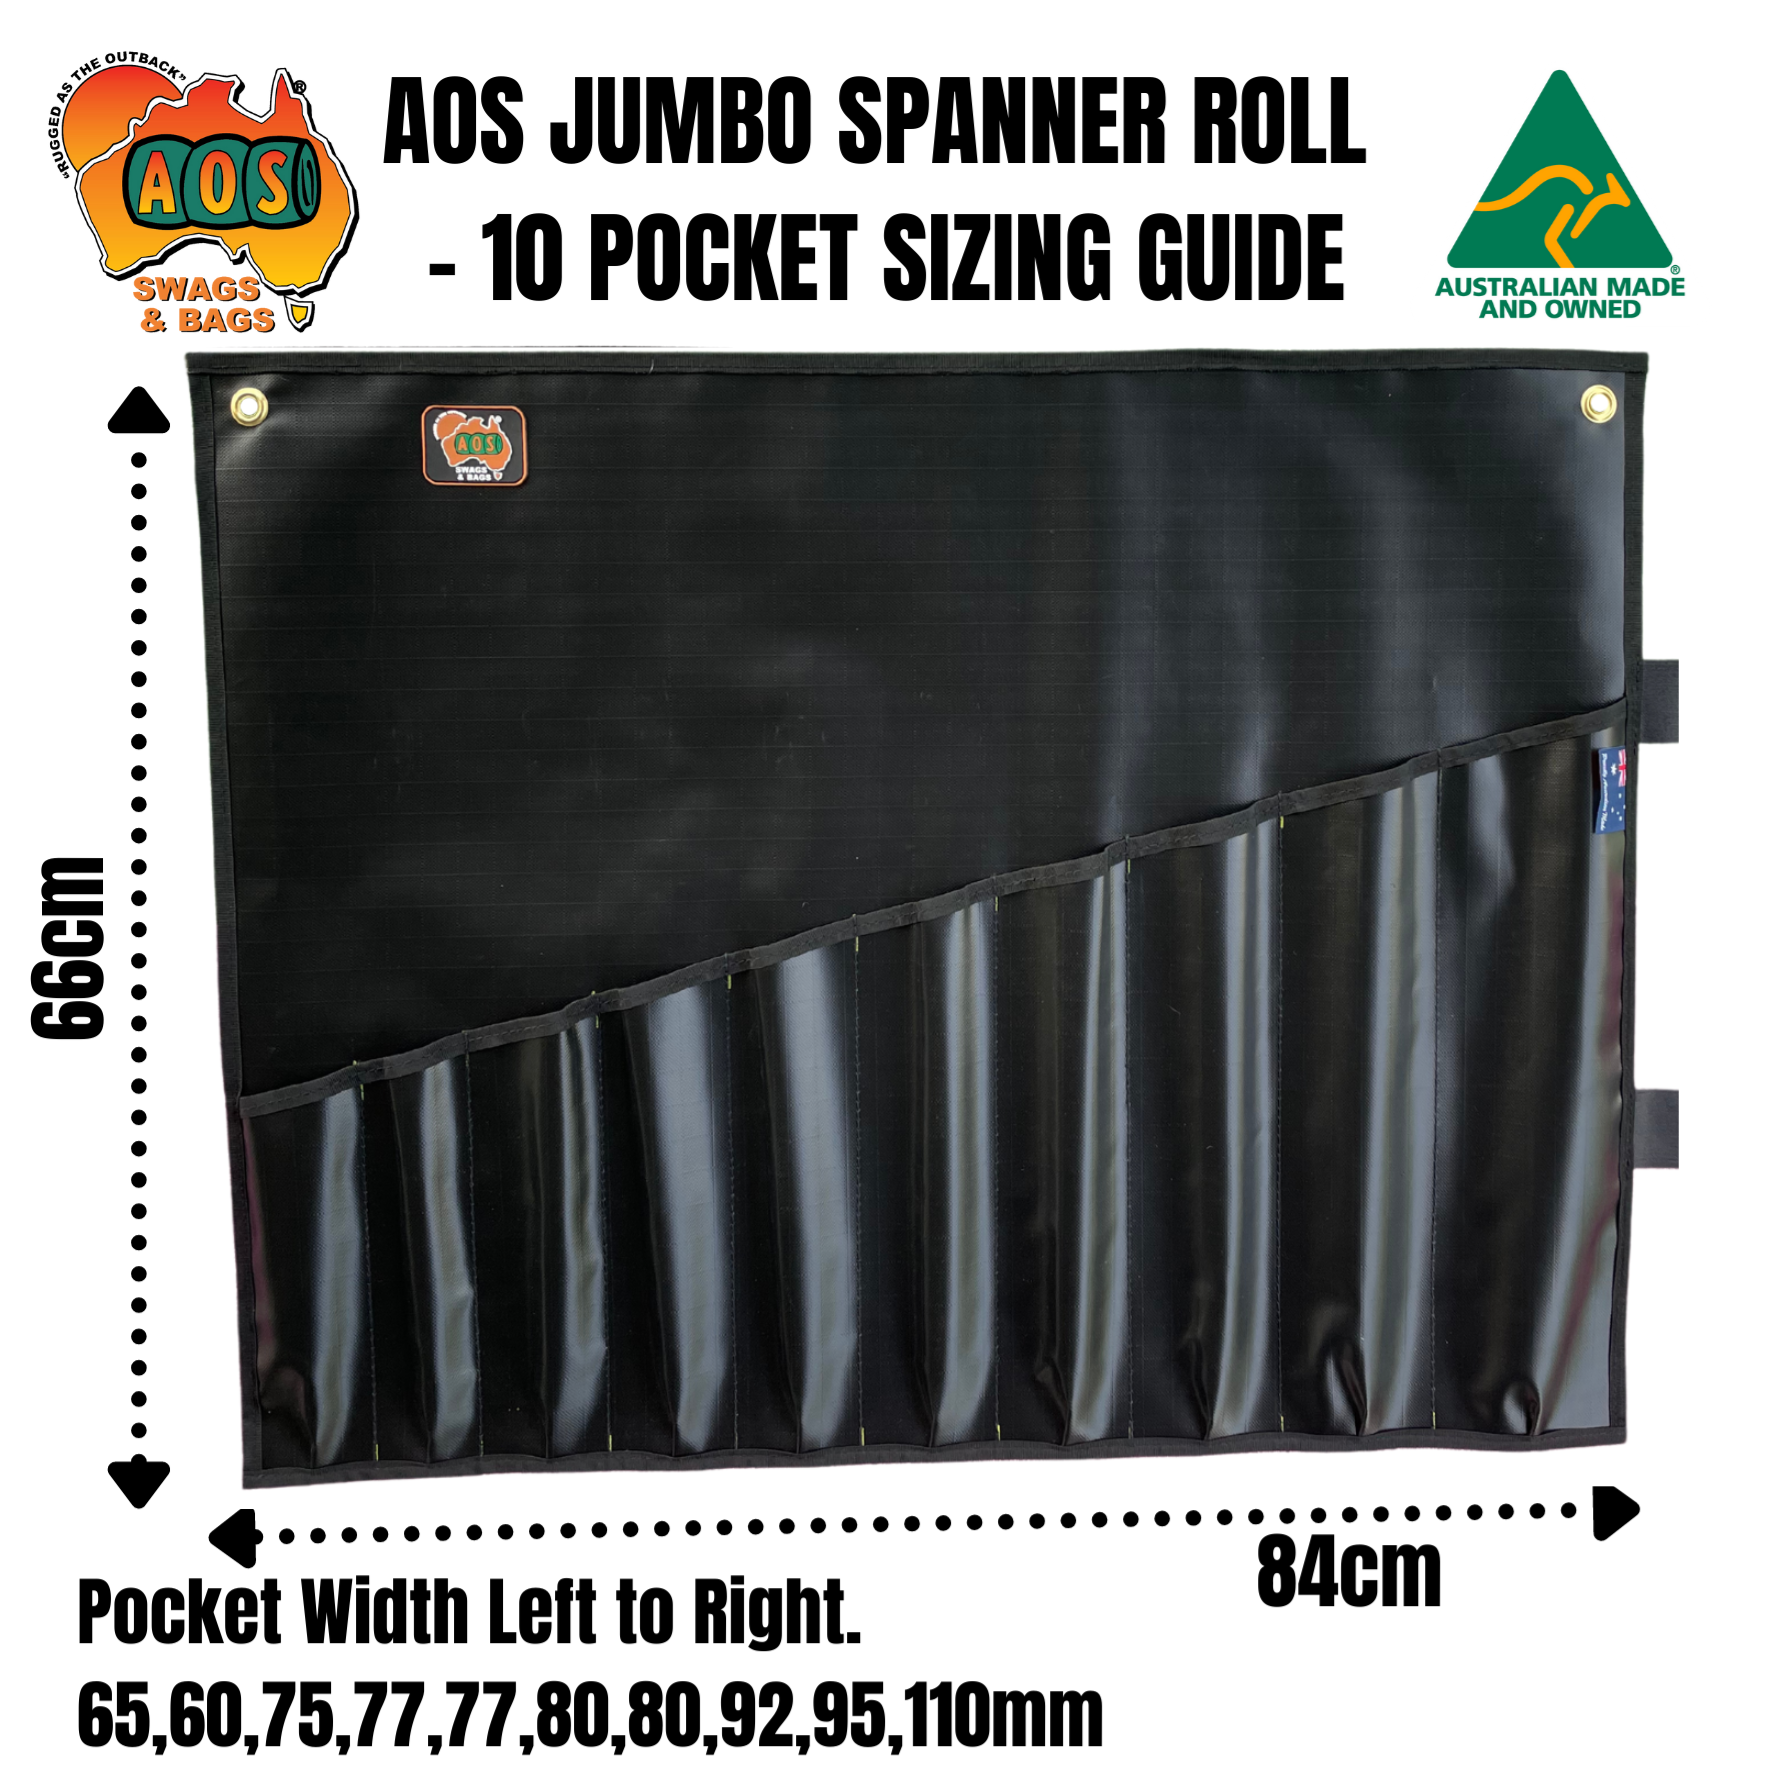 Large Black 10 Pocket Spanner Roll AOSROLLSP03BK by AOS